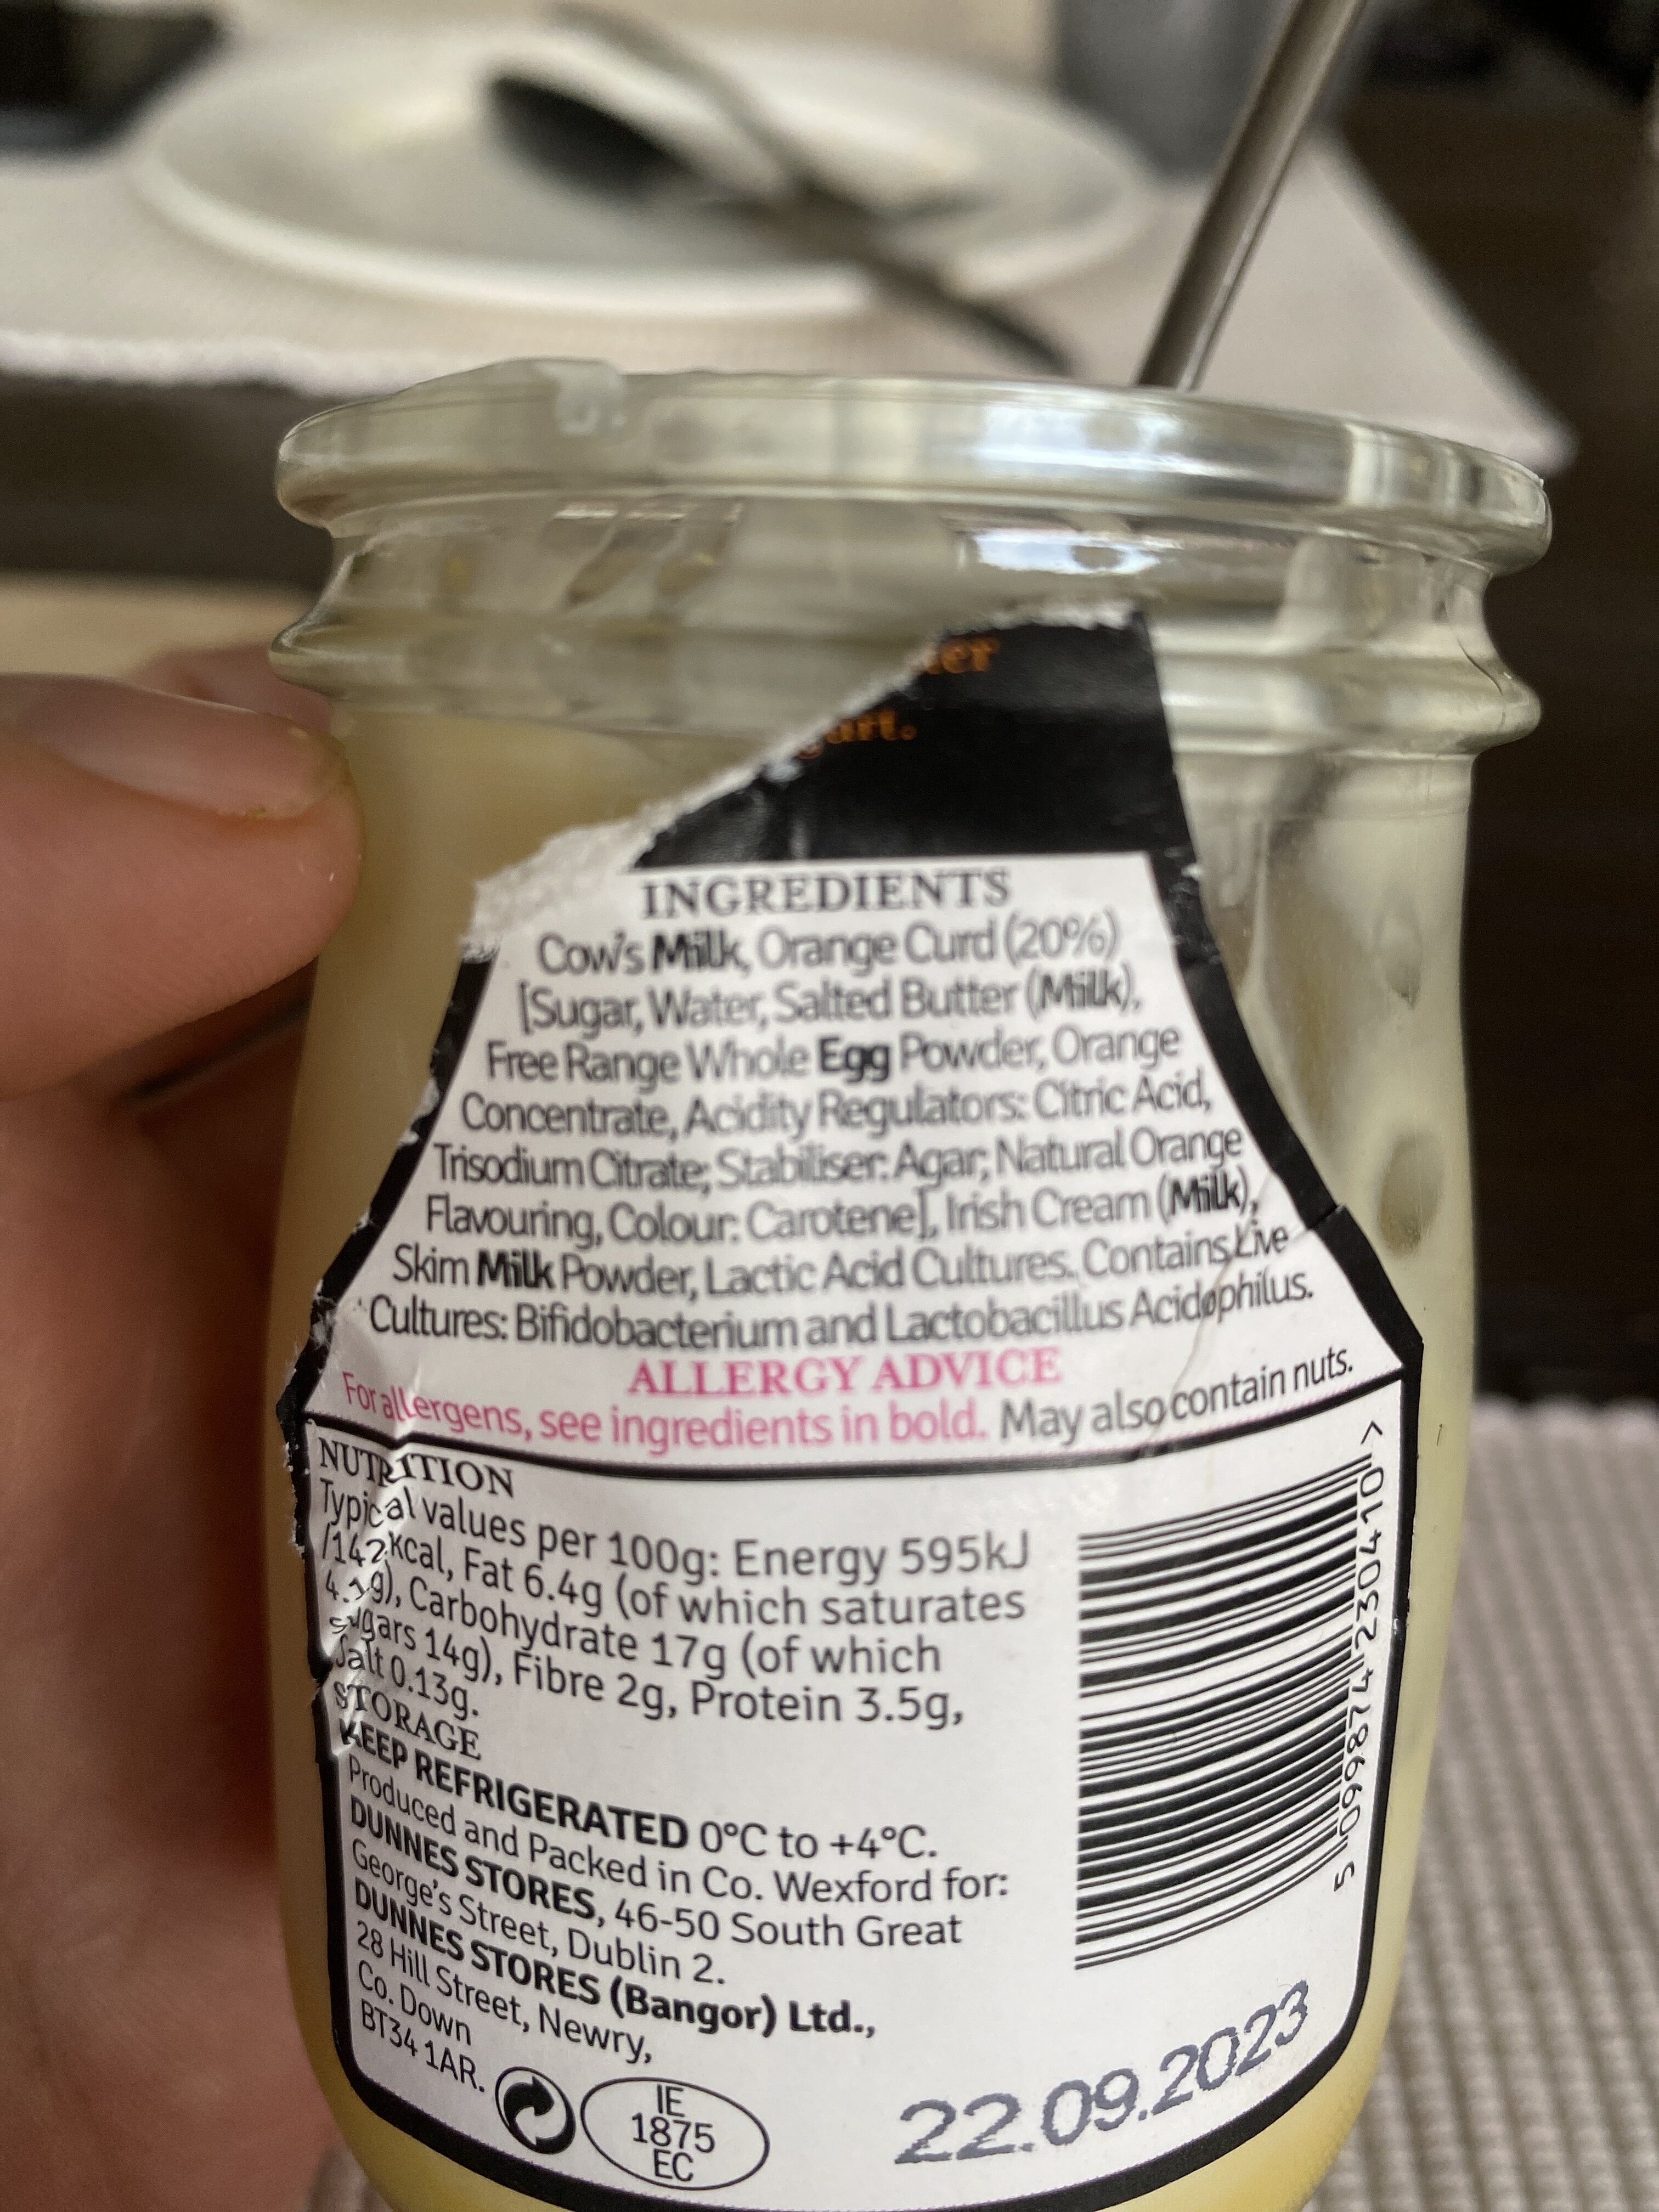 Dunnes stores orange curd yogurt - Ingredients